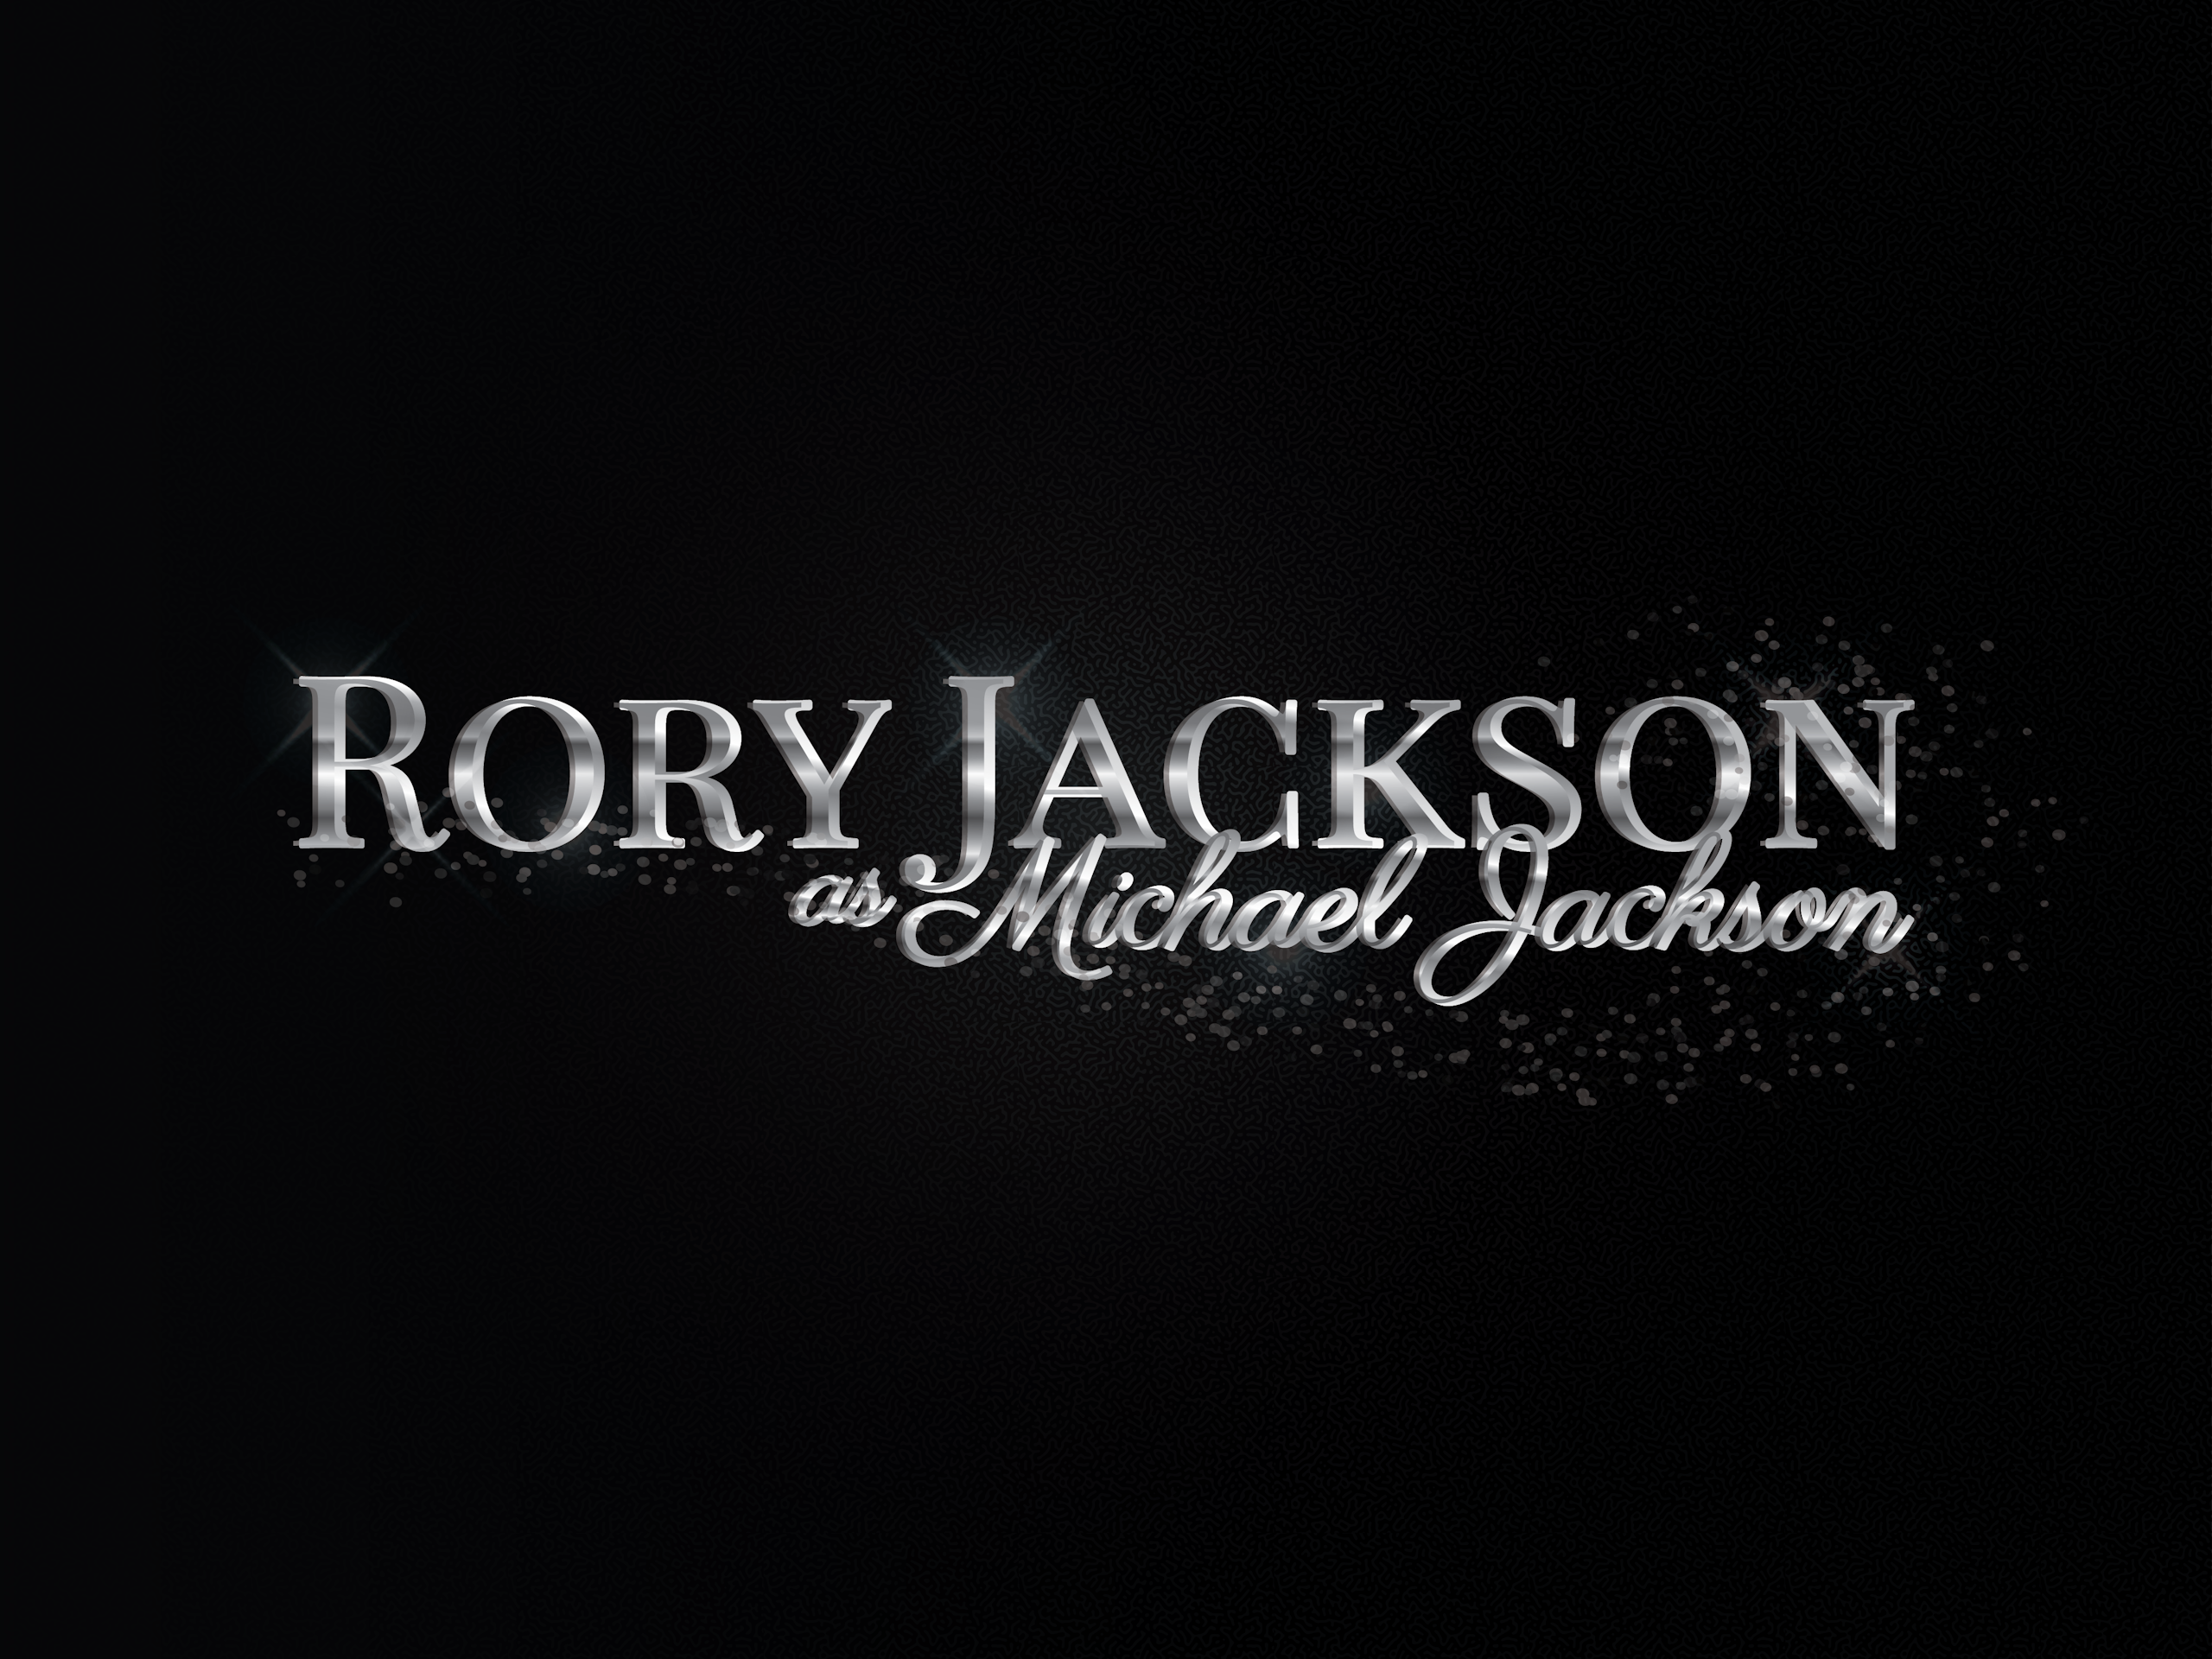 Rory Jackson as Michael Jackson - Billie Jean Live 16/03/24